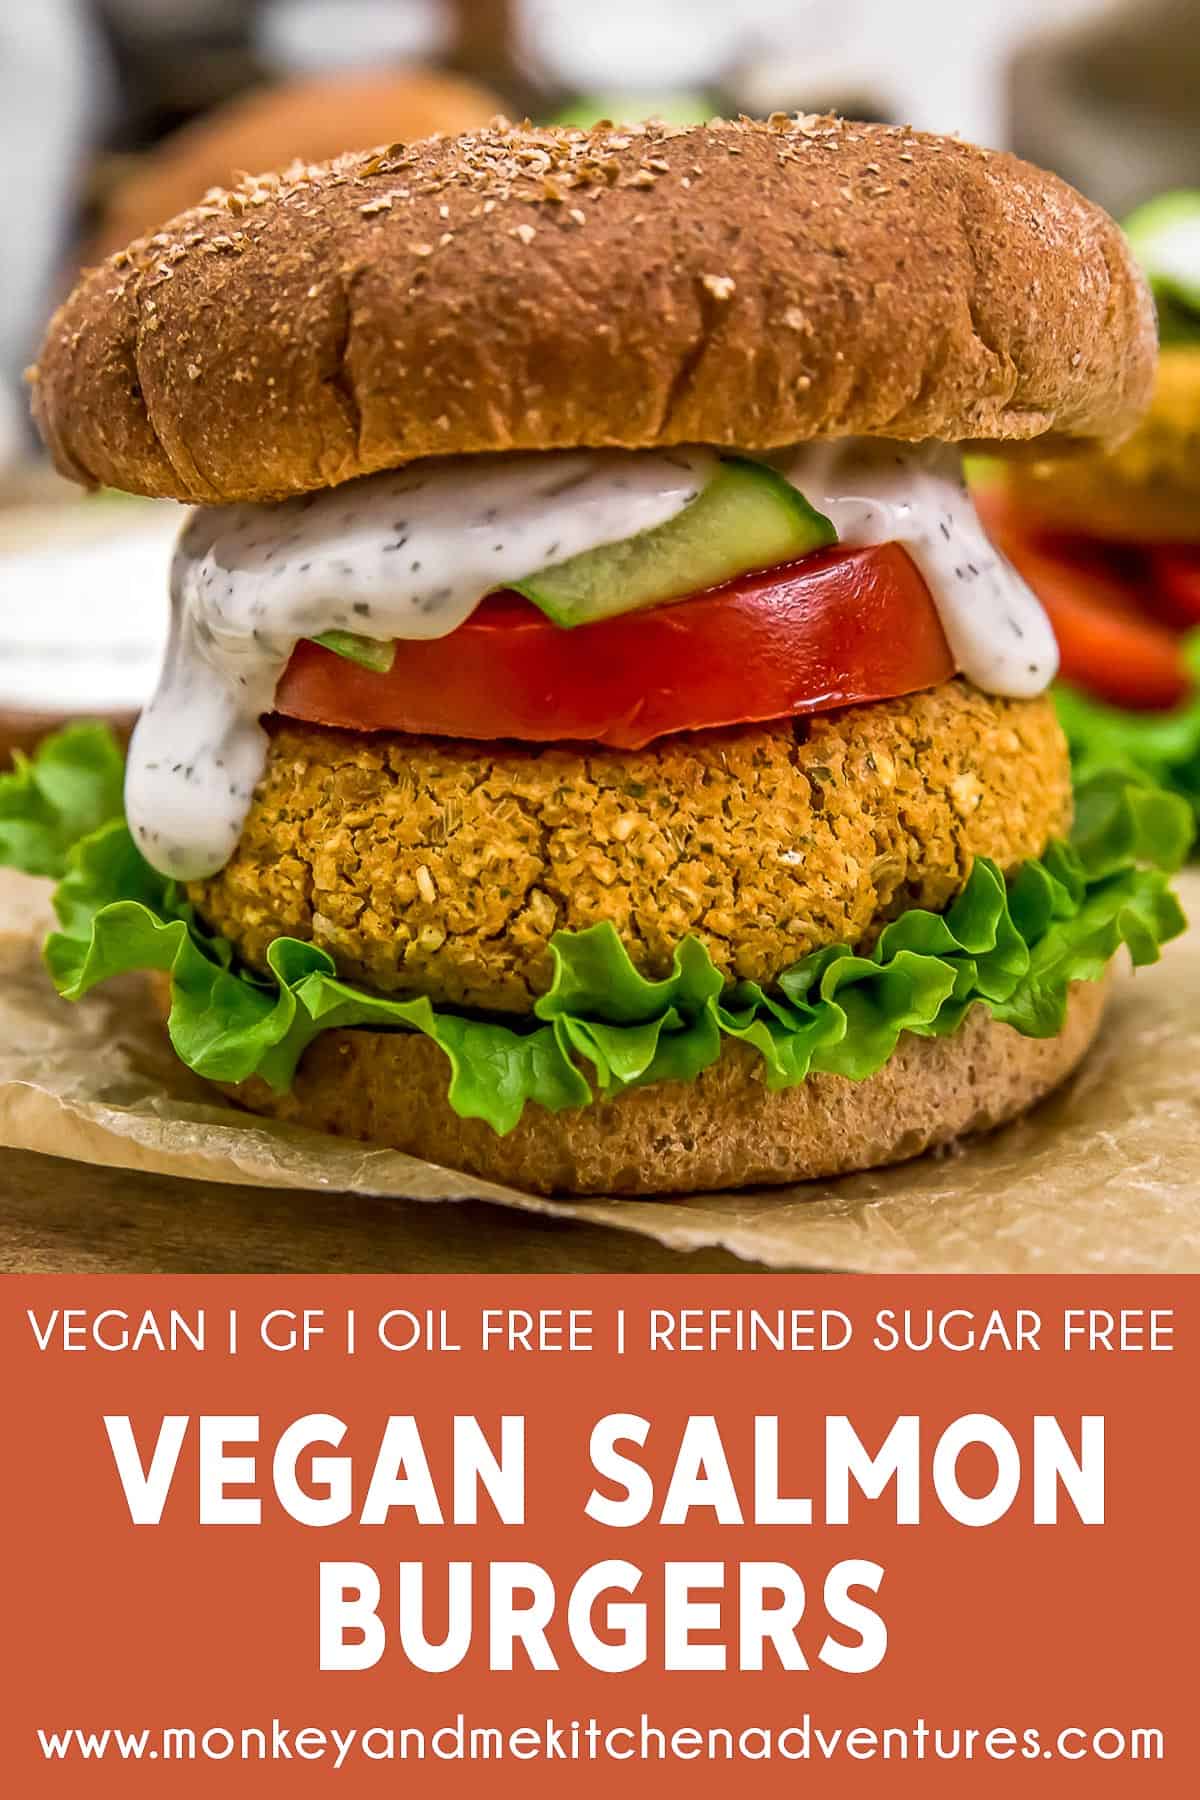 Vegan “Salmon” Burger with text description